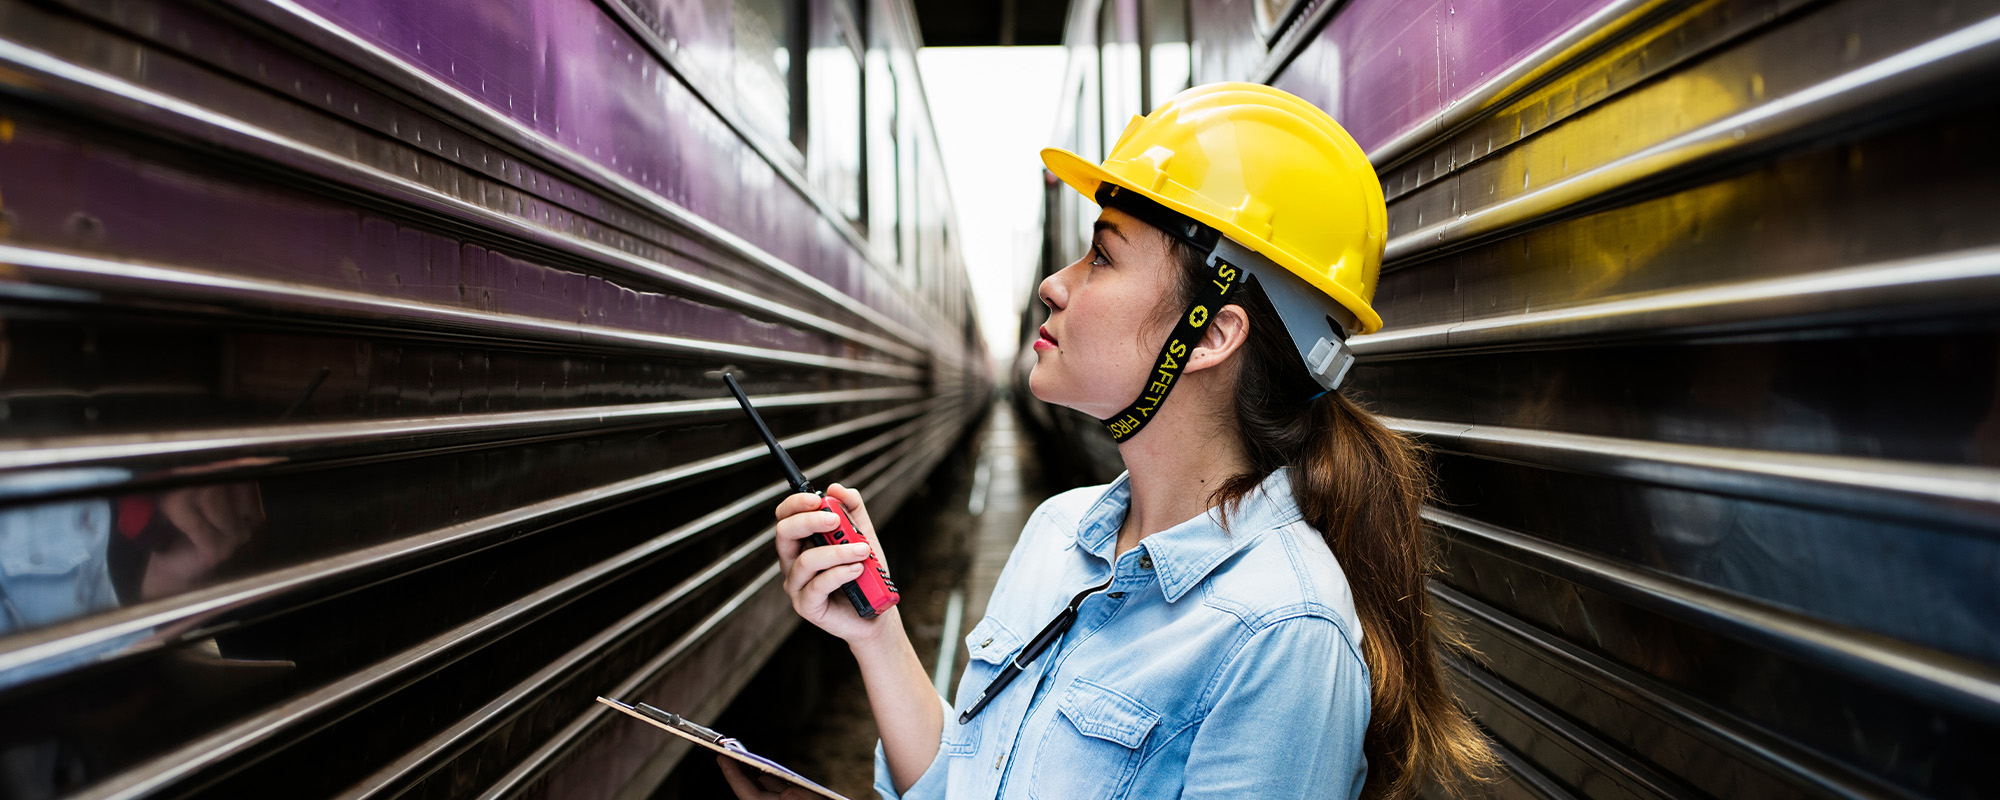 woman survey train safety project concept